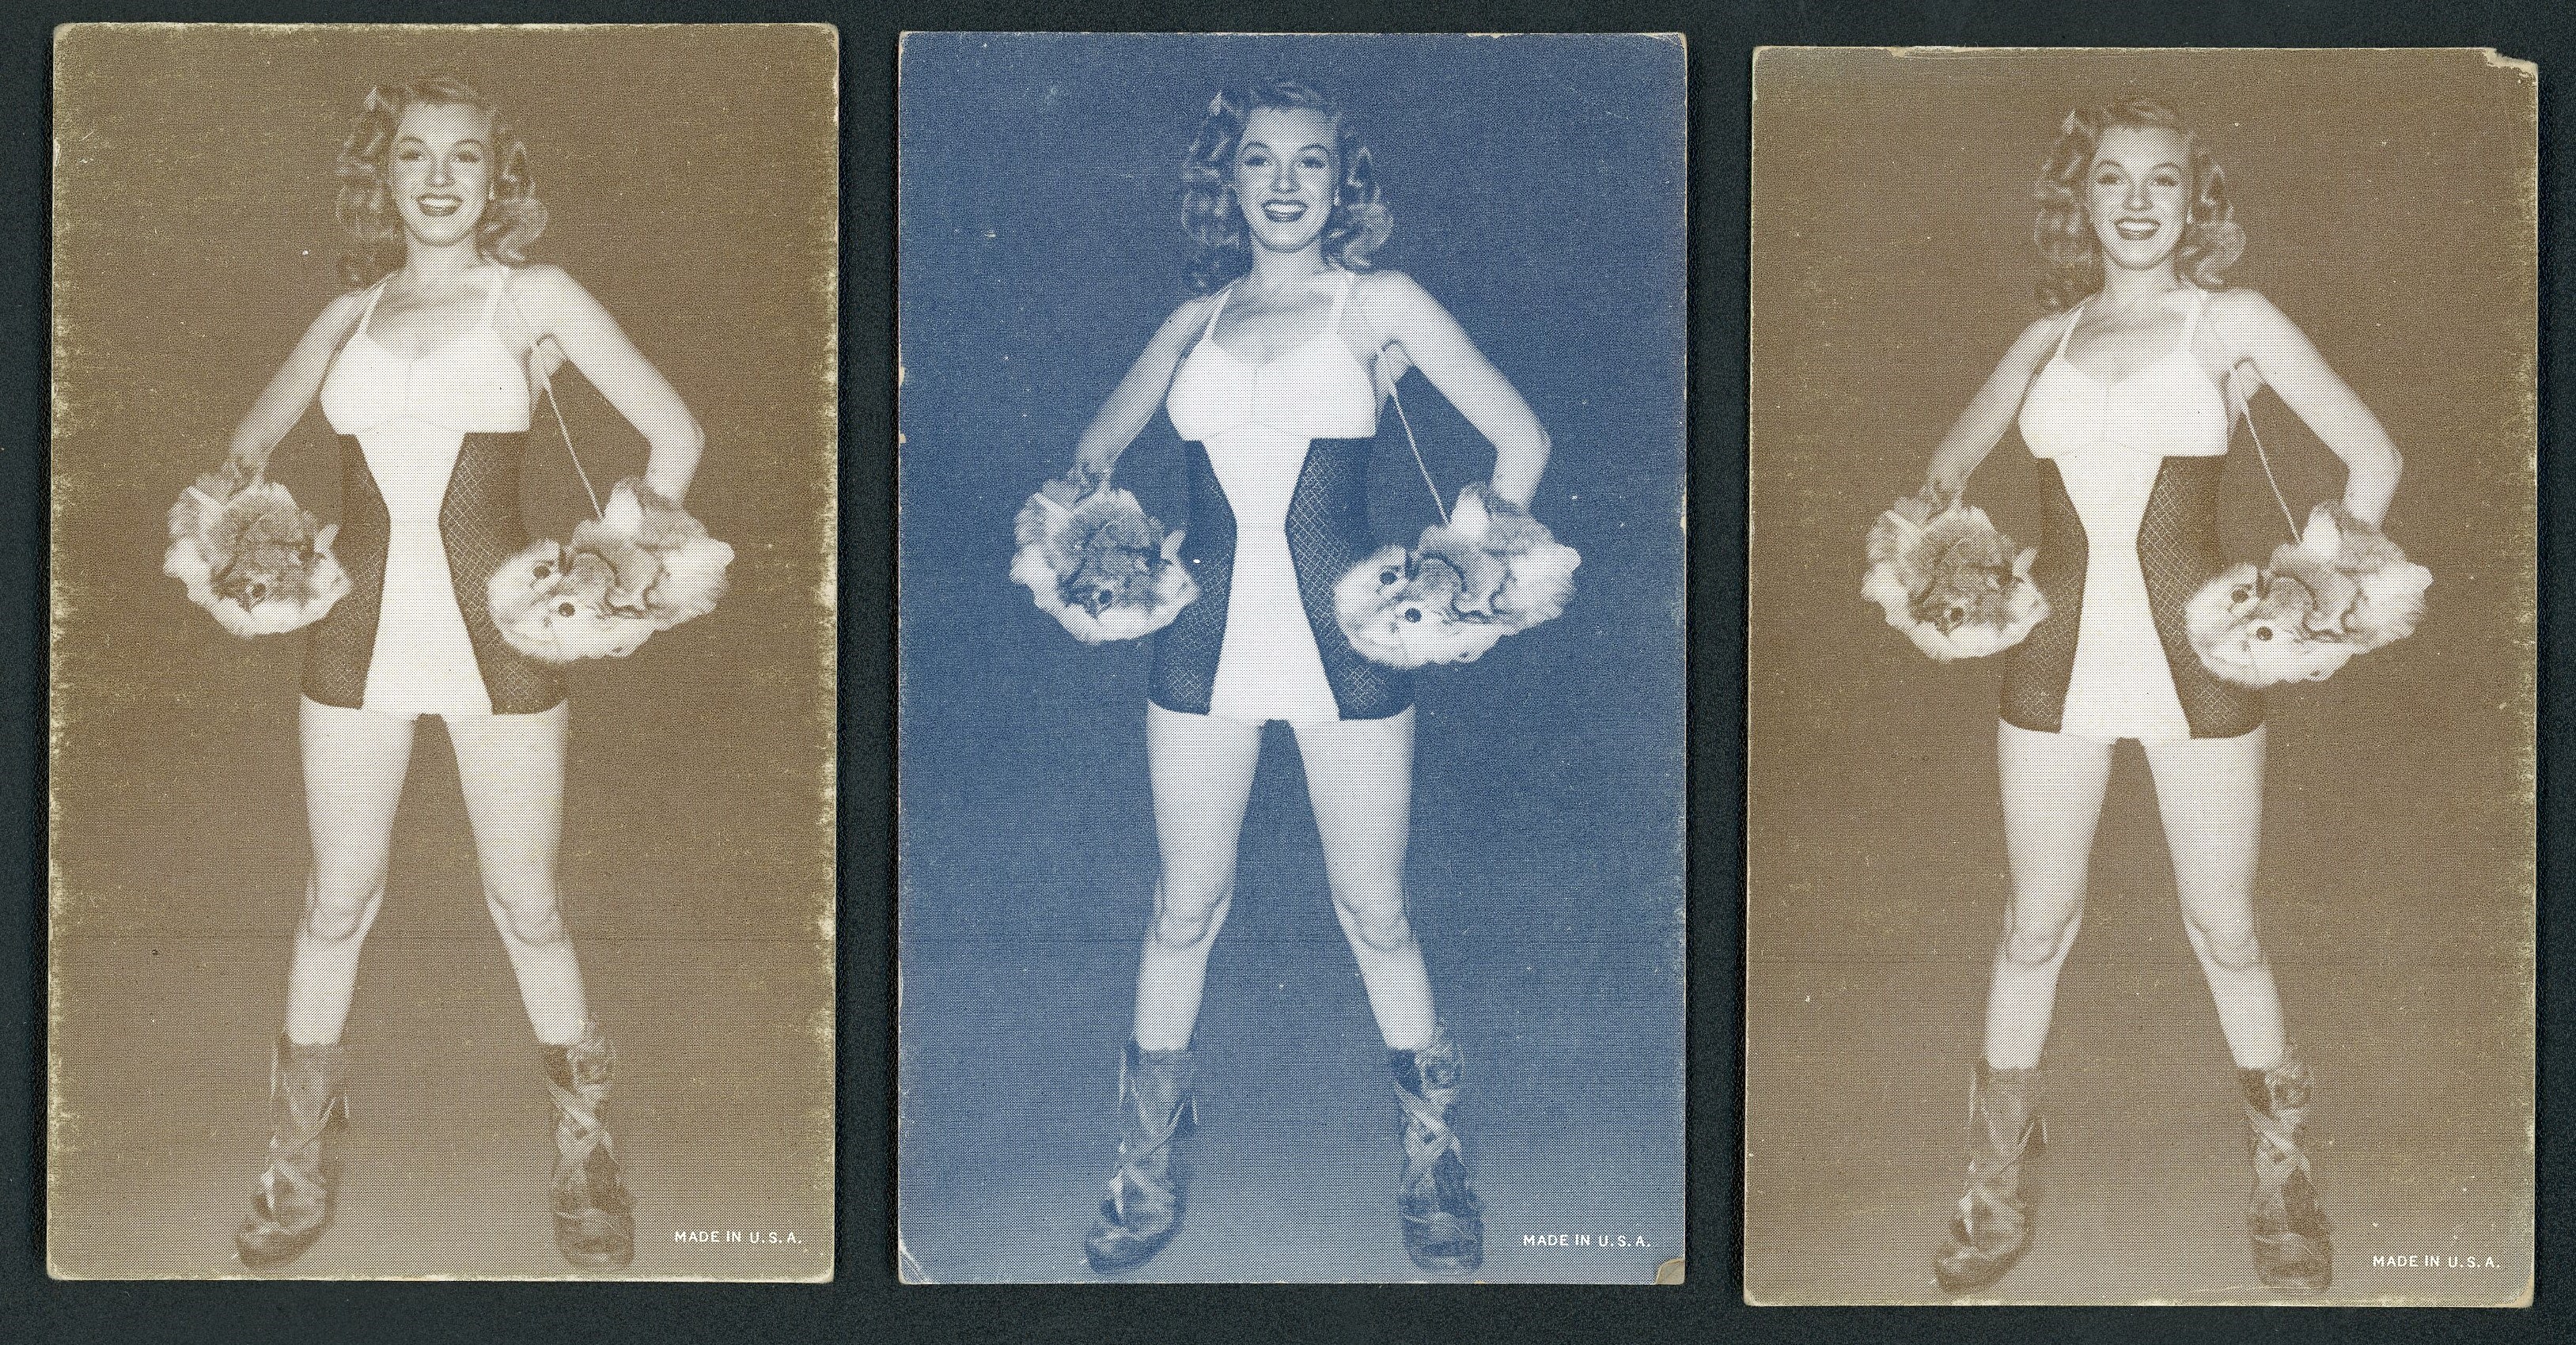 1950s Marilyn Monroe Exhibit Card Collection of 6 - Rare!